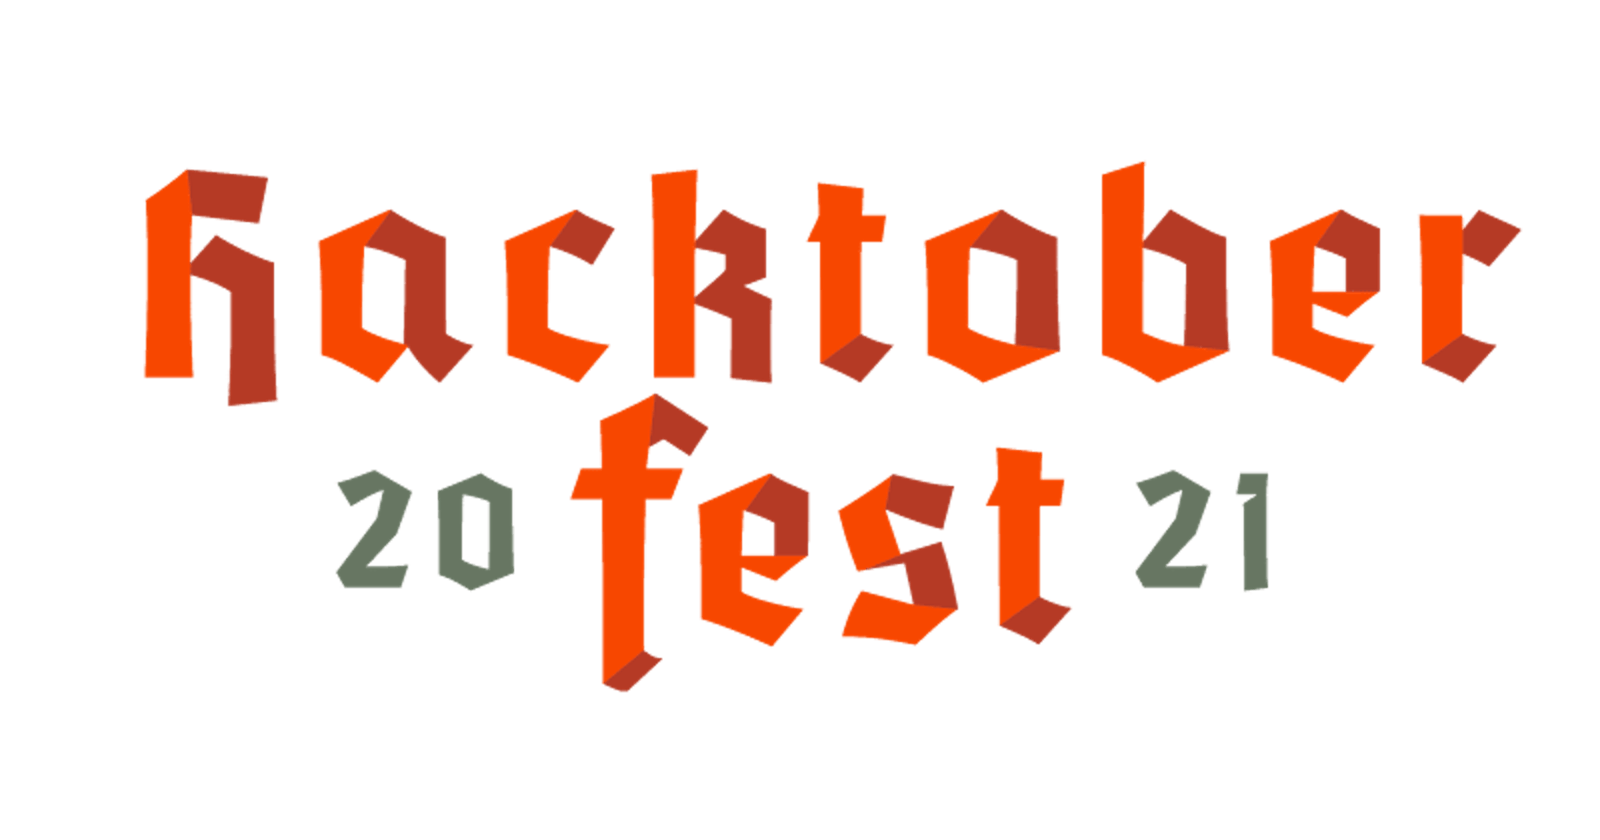 Hacktoberfest 2021: Project Maintenance